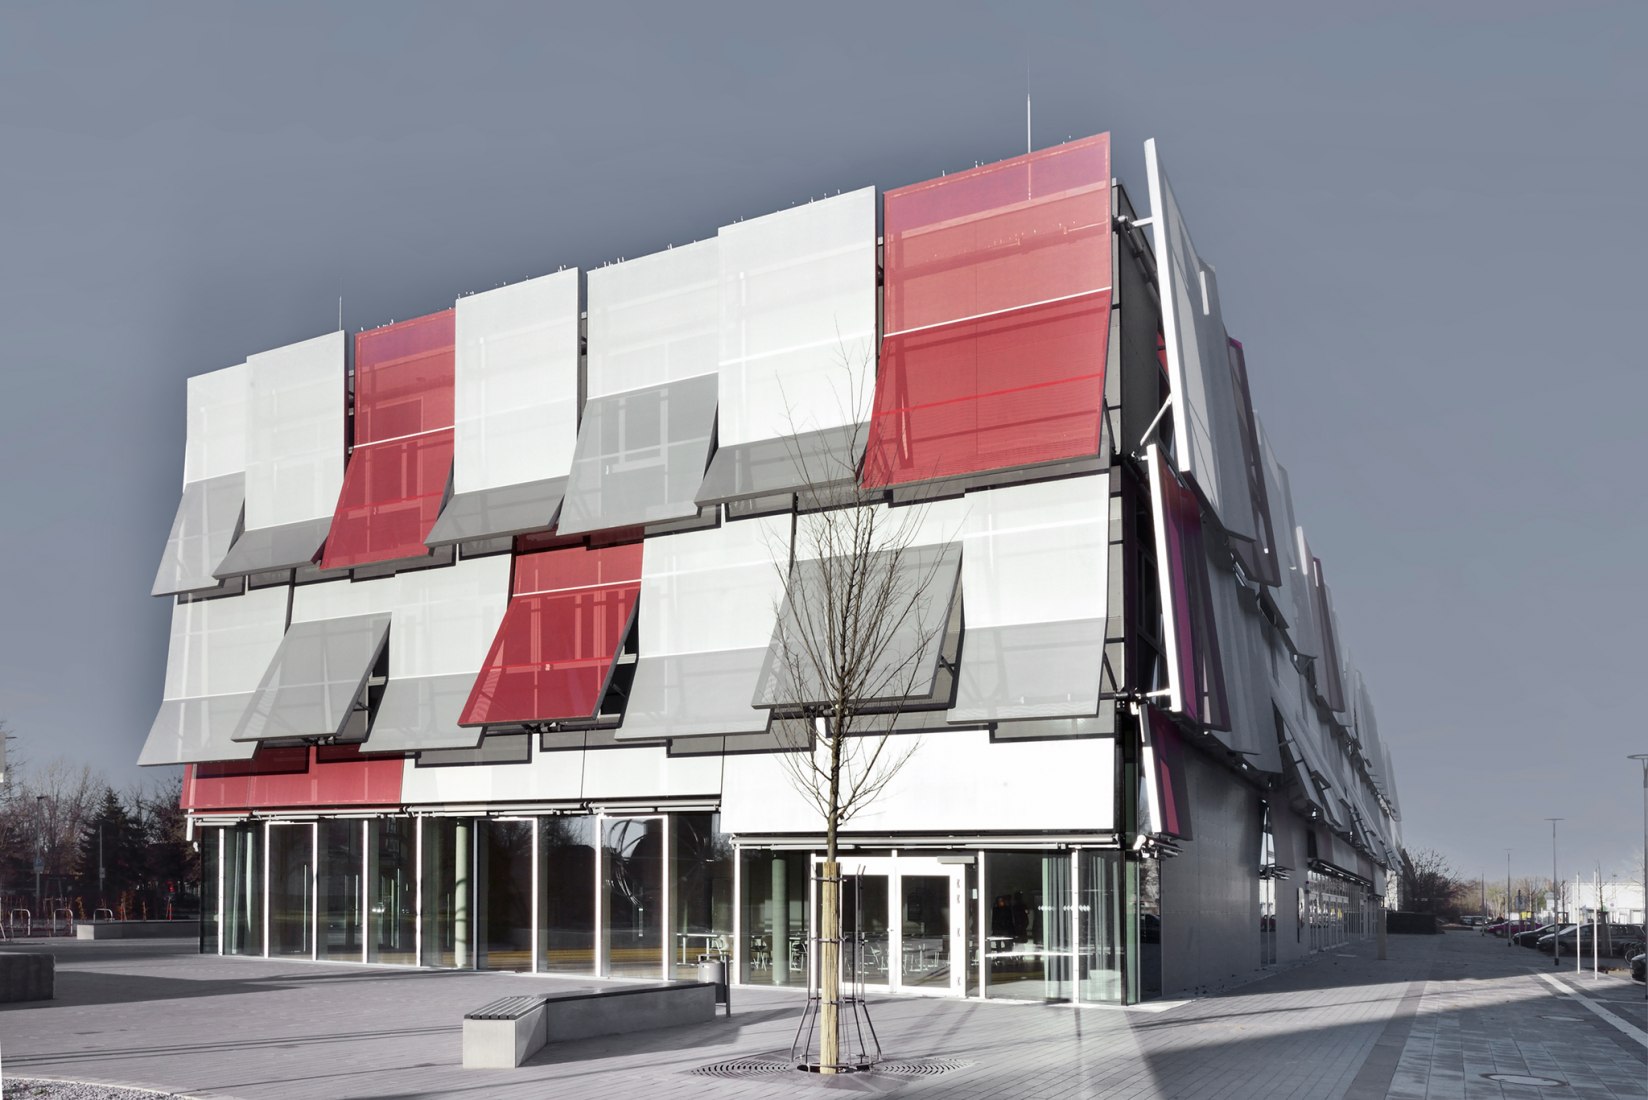 Centro Regional de Start-up Startblock B2 por United Architektur, ludwig heimbach architektur. Fotografía por Kay Fingerle.